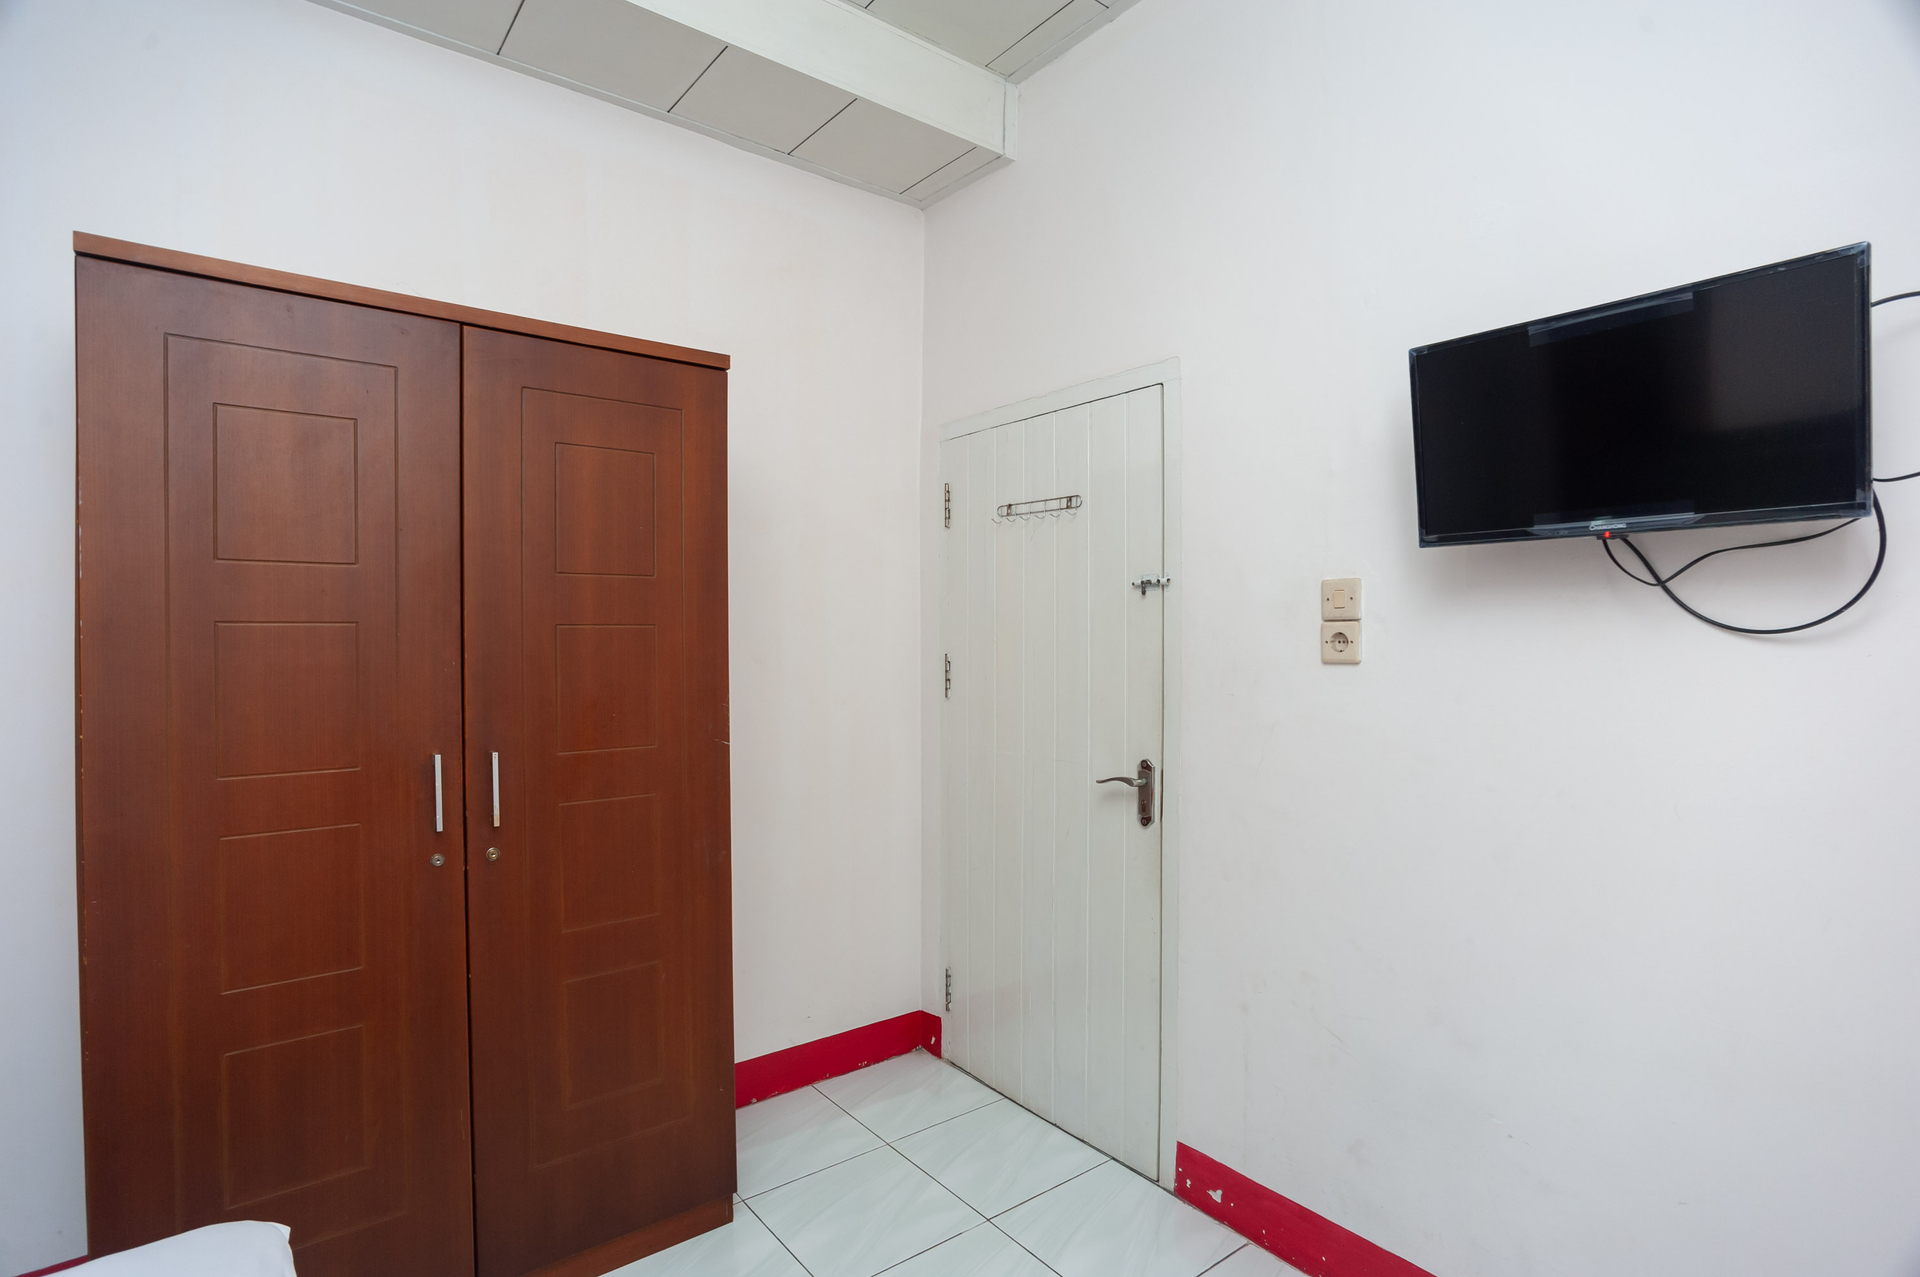 Bedroom 4, RedDoorz Syariah near Tugu Juang Jambi 3, Jambi